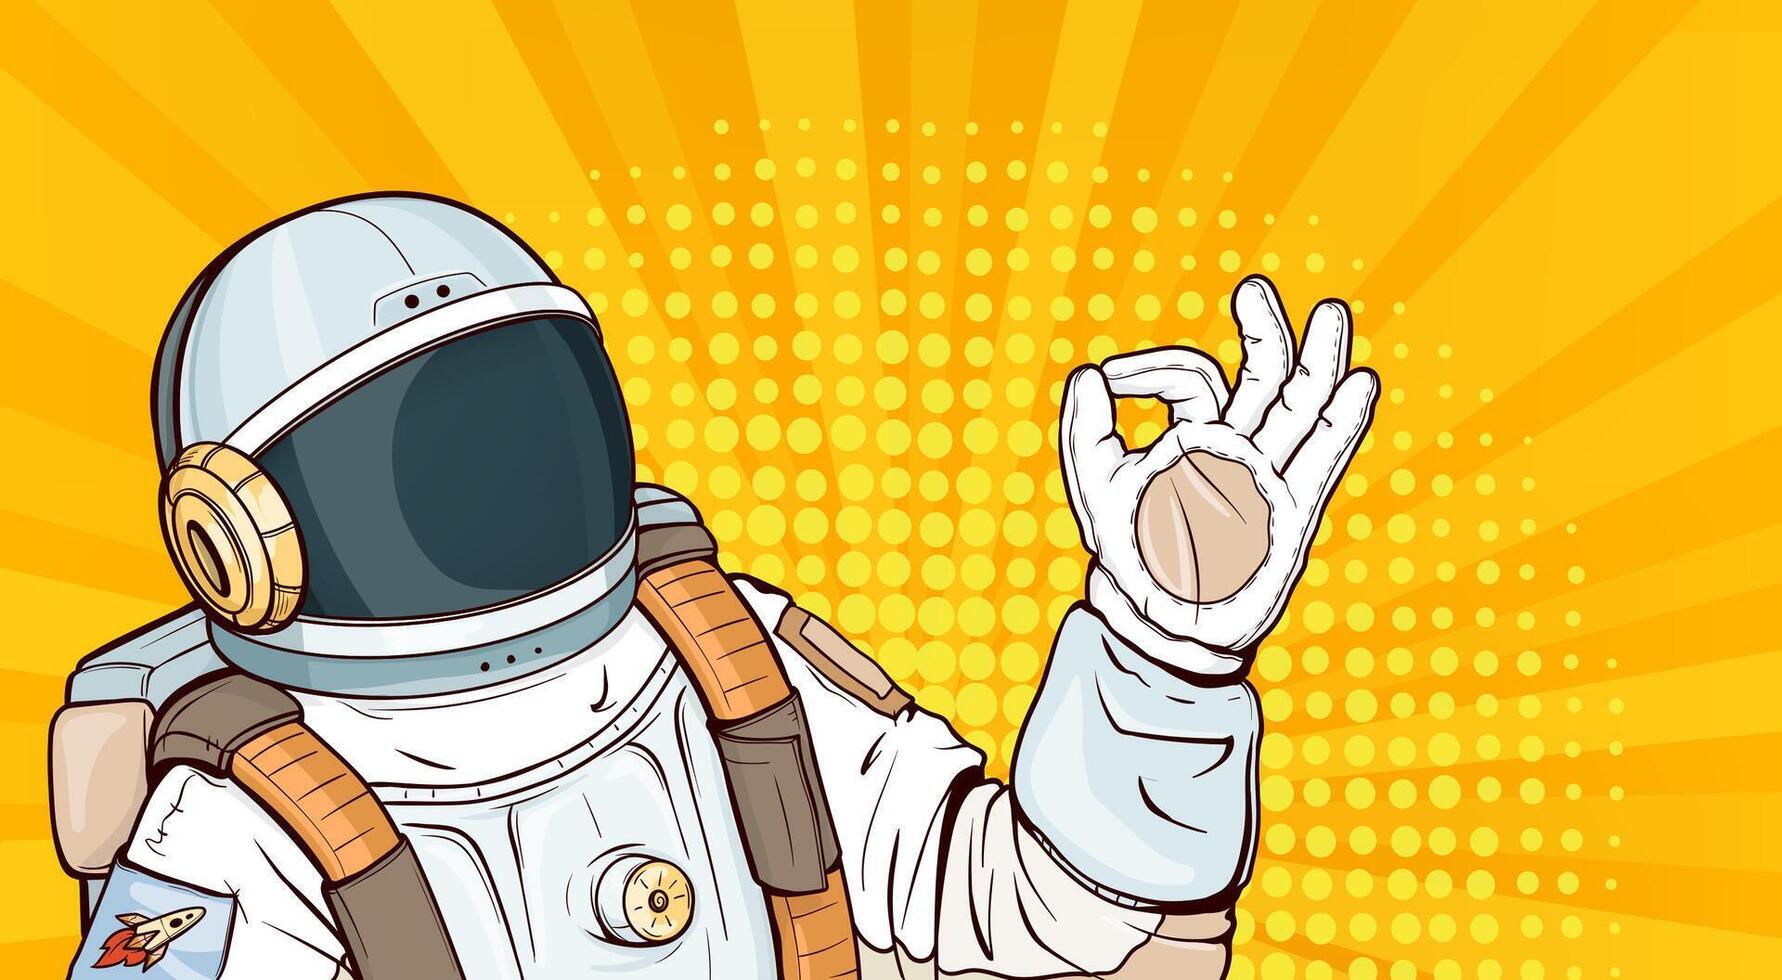 Astronaut in spacesuit showing ok gesture pop art illustration. Cosmonaut in helmet, uniform costume for space exploration and flight in cosmos gesturing okay sign on yellow halftone background vector